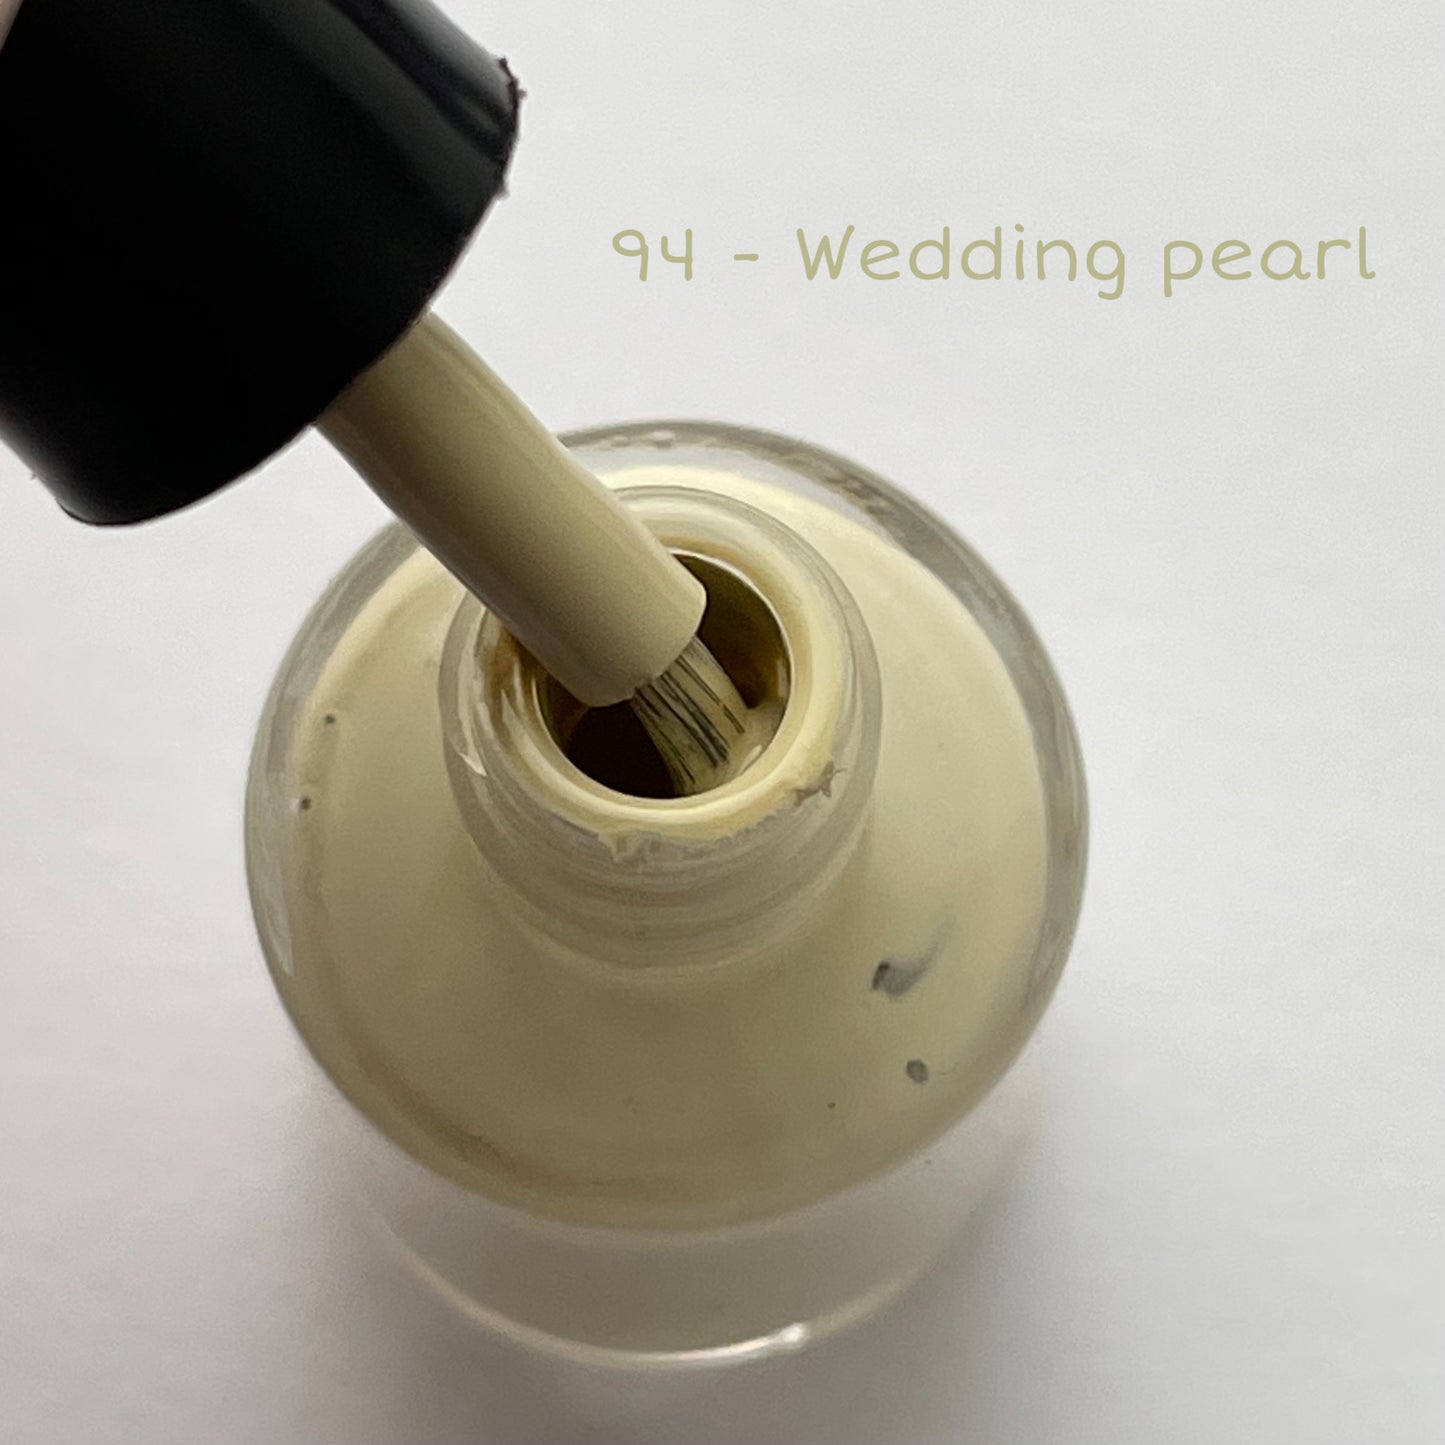 94 Wedding Pearl